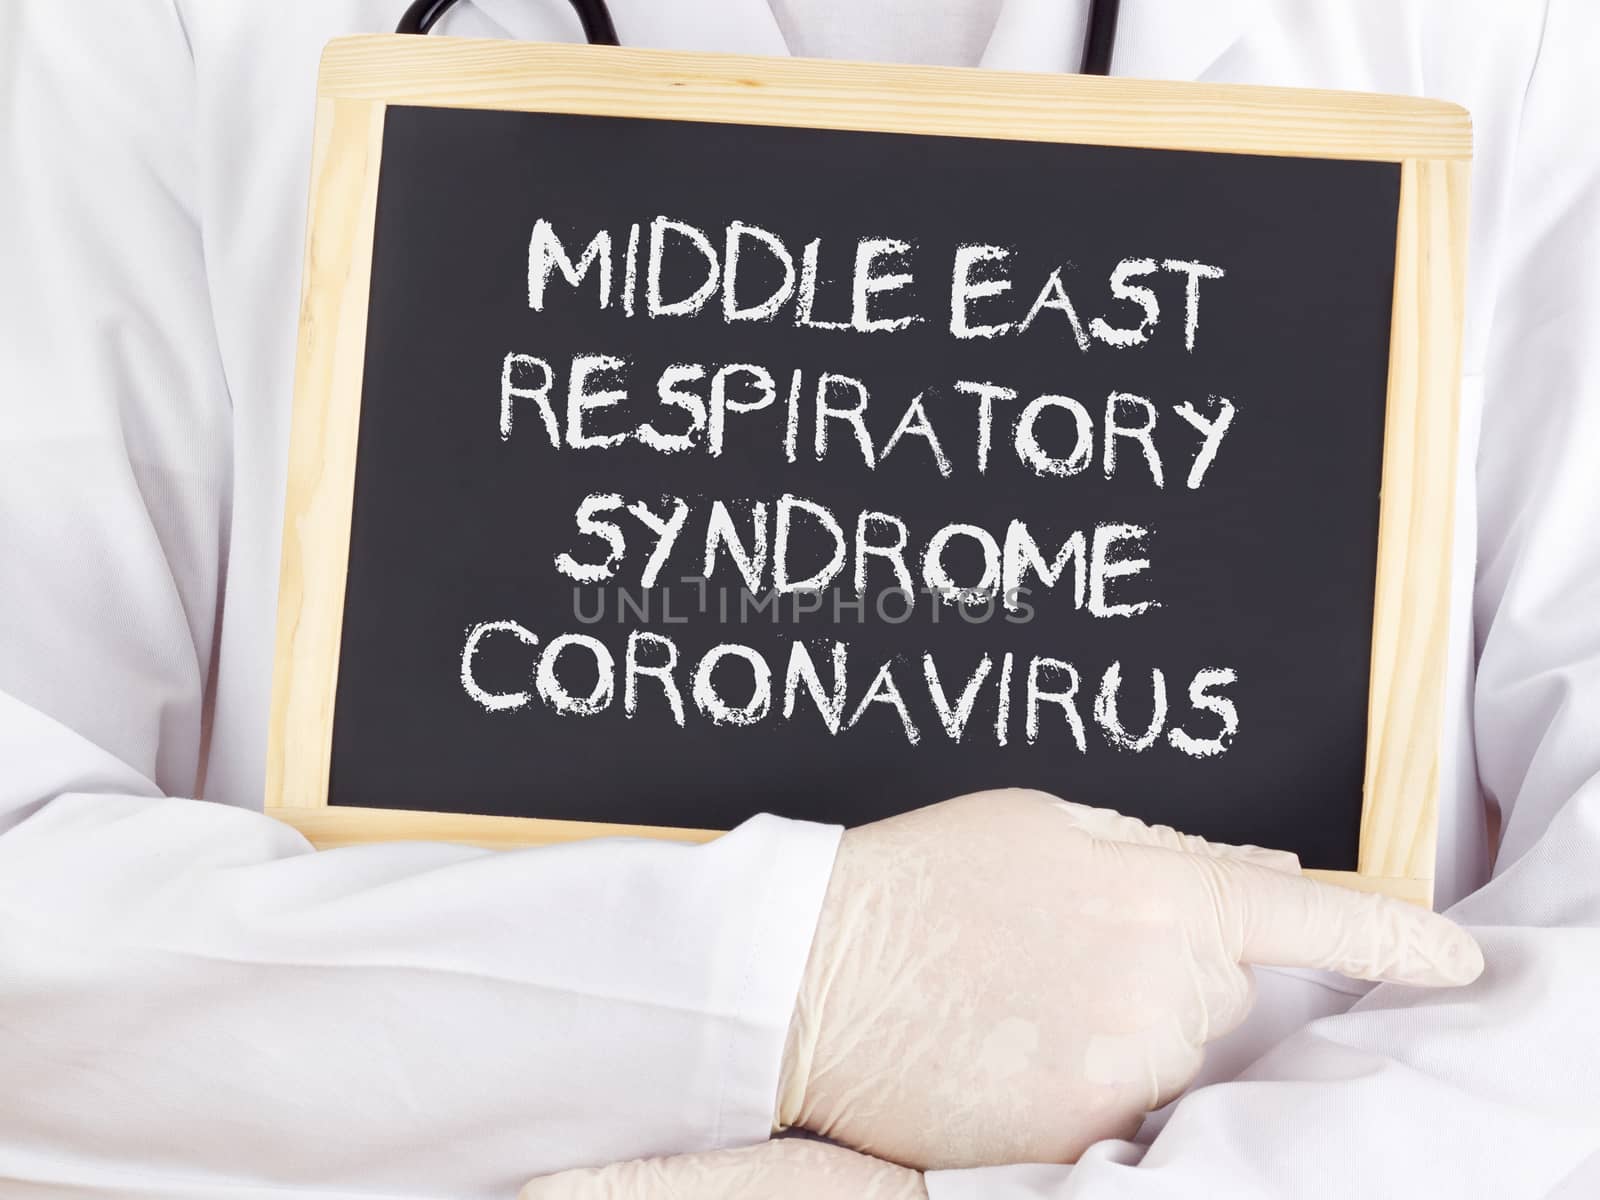 Middle east respiratory syndrome coronavirus